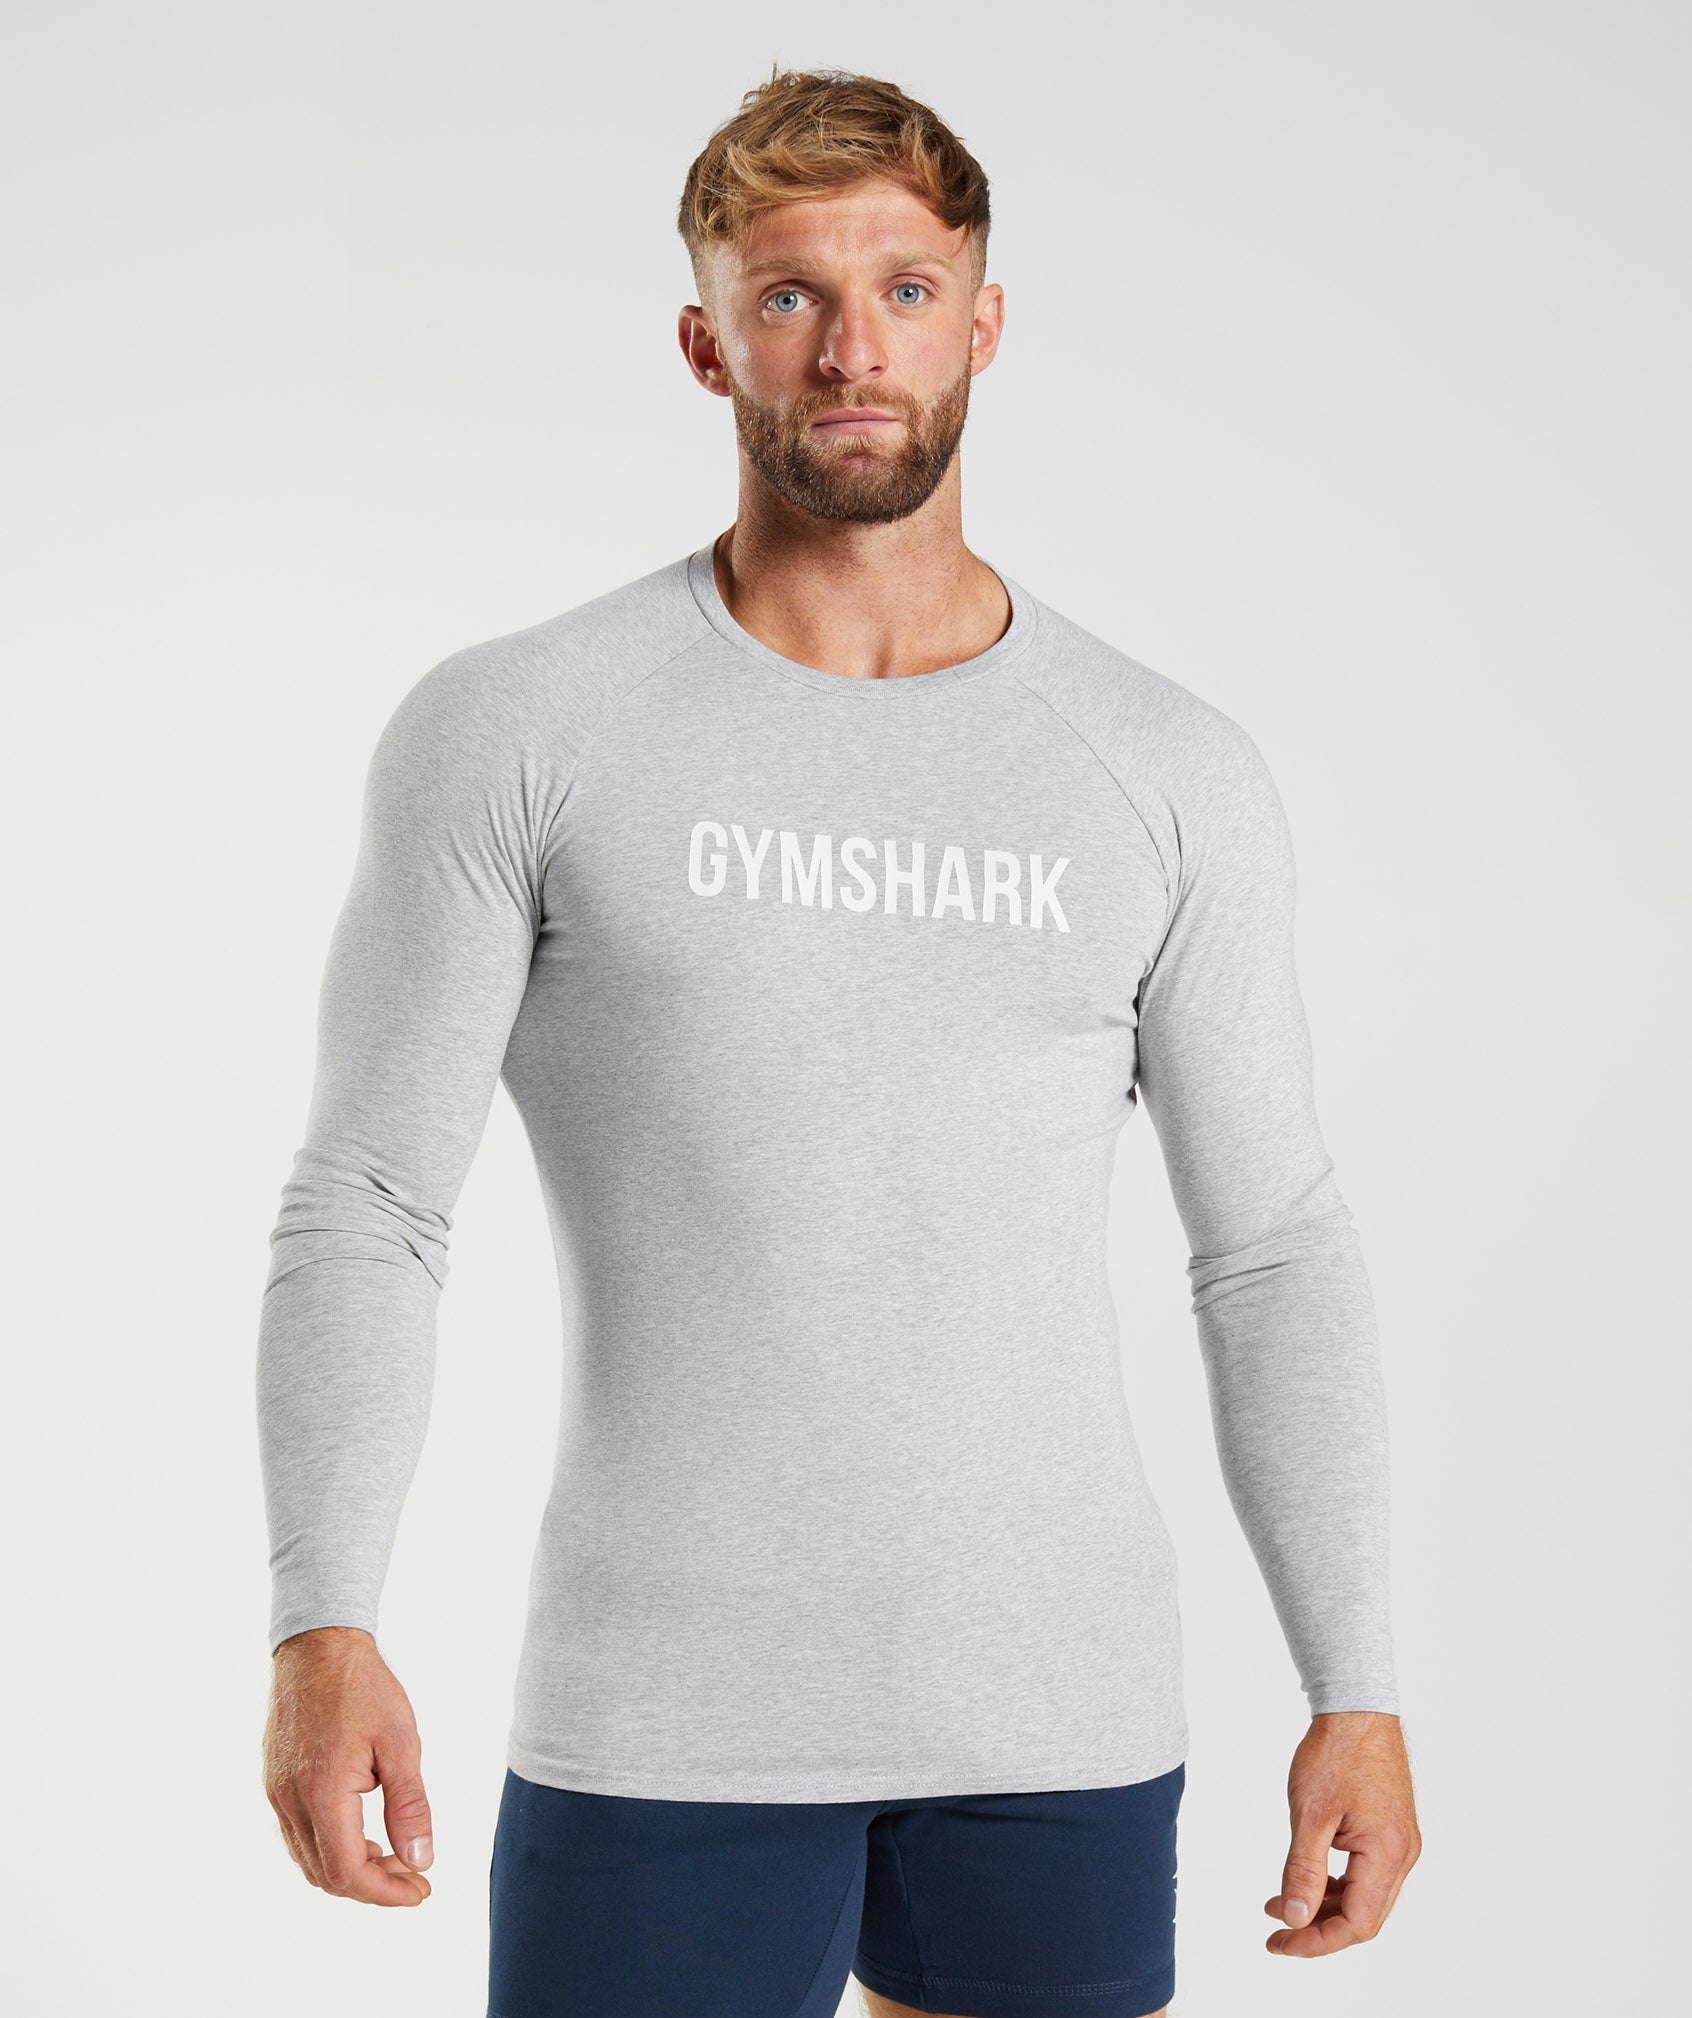 Gymshark Apollo Long Sleeve T-Shirt - Light Grey Marl